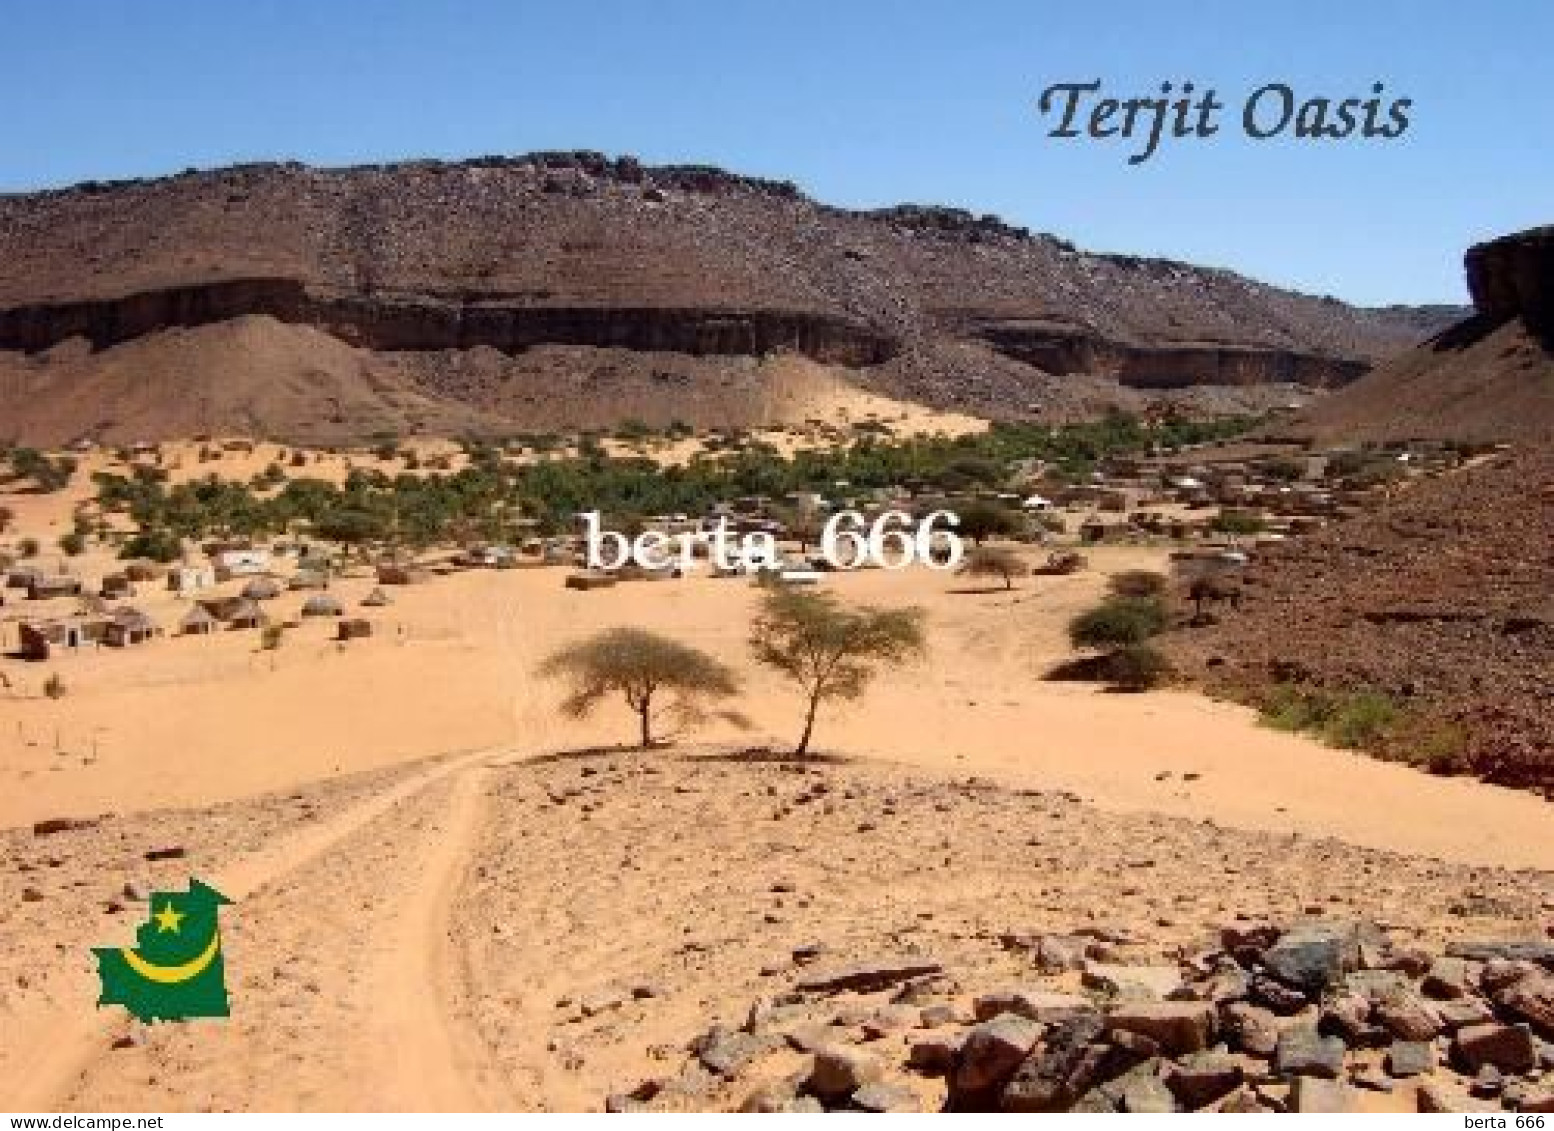 Mauritania Terjit Oasis New Postcard - Mauritania